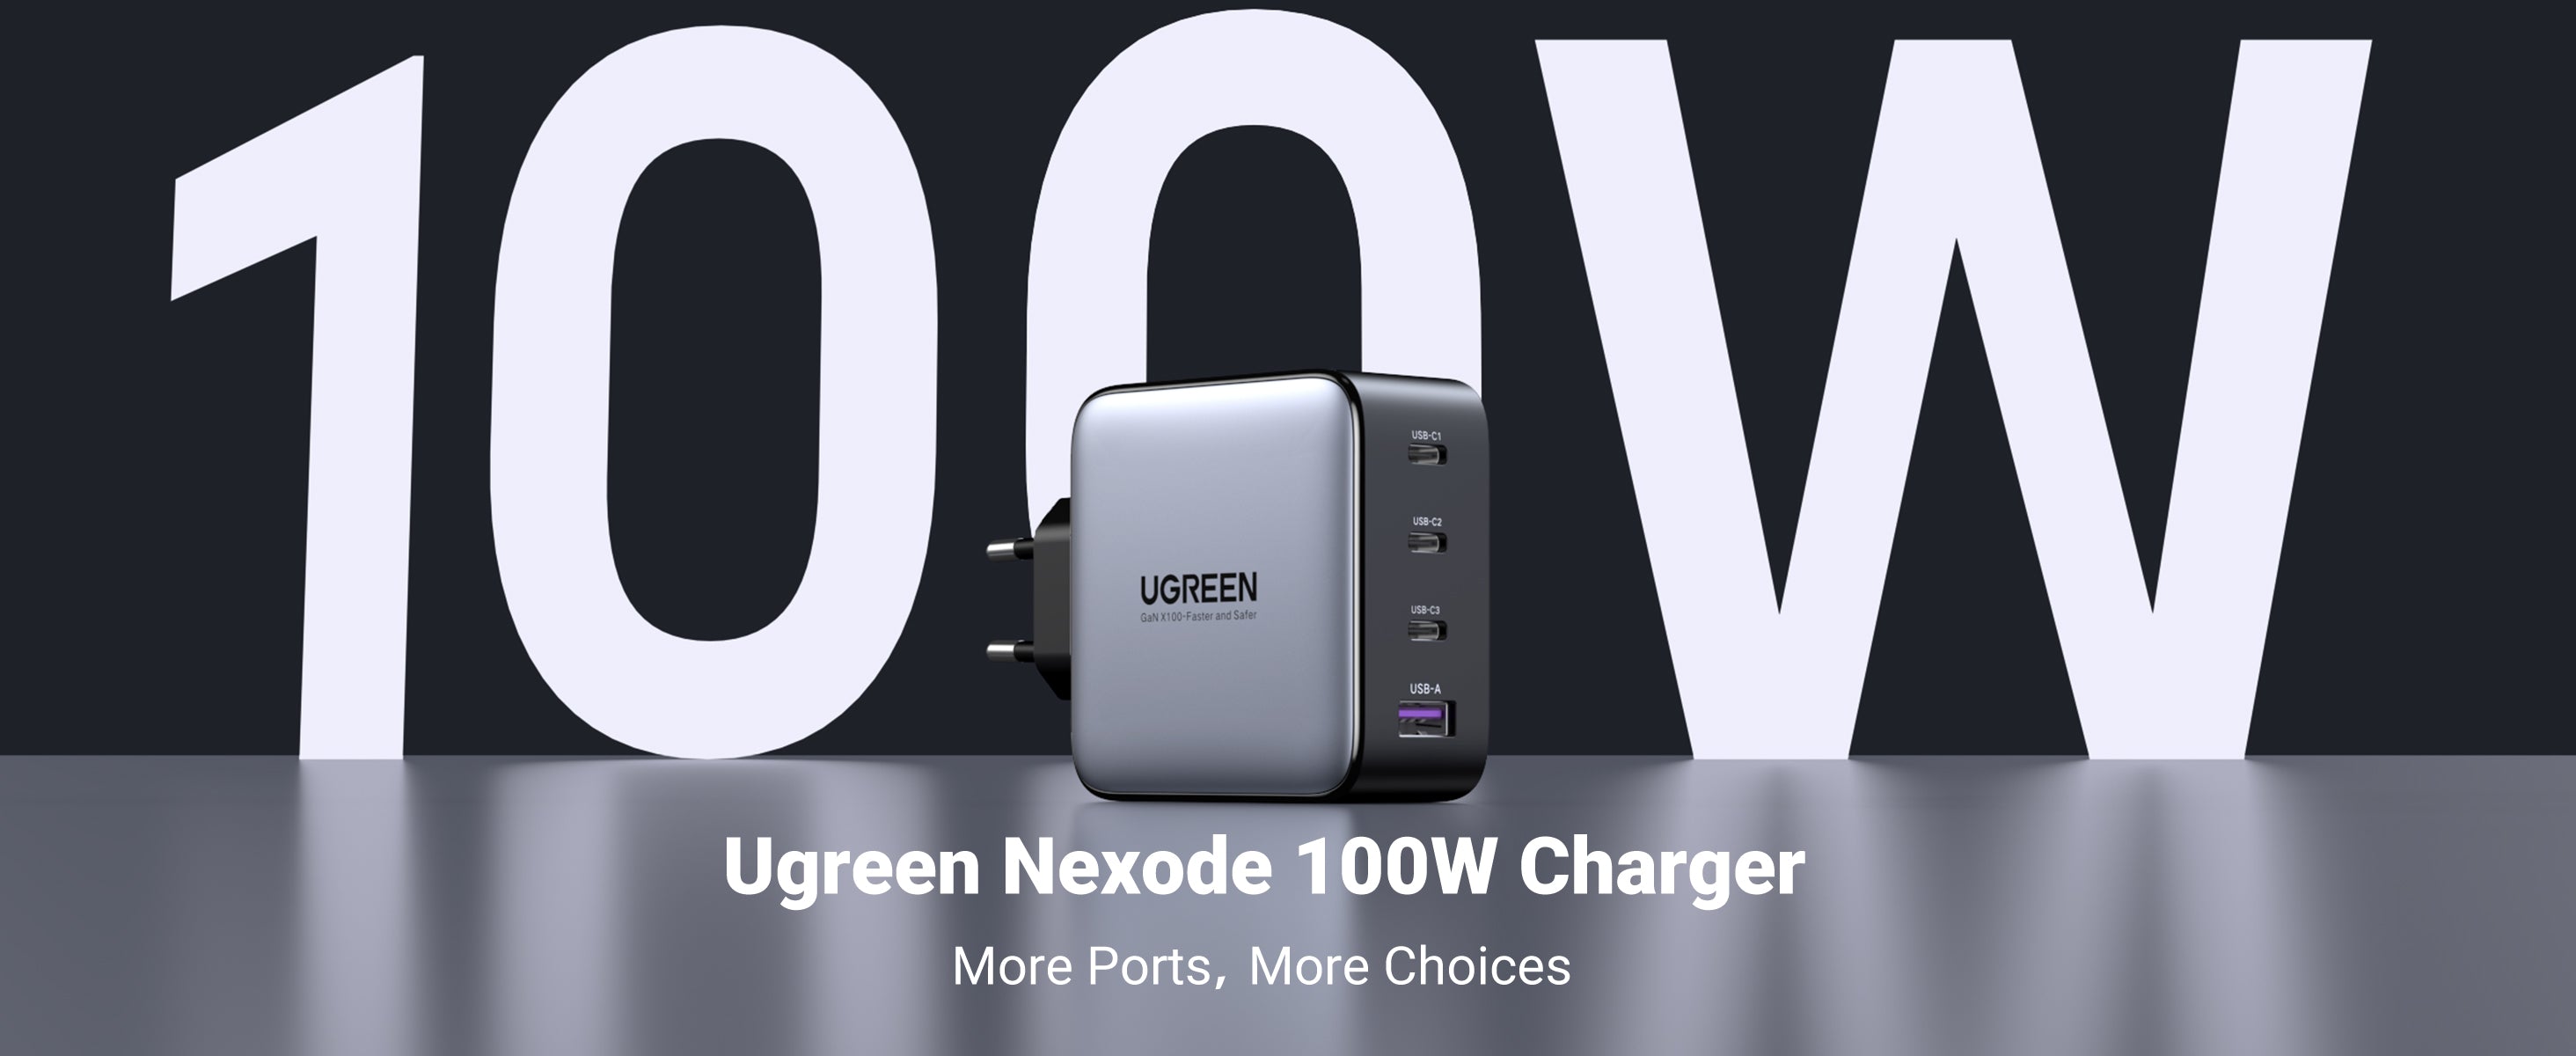 Ugreen Nexode 100W USB C GaN Charger